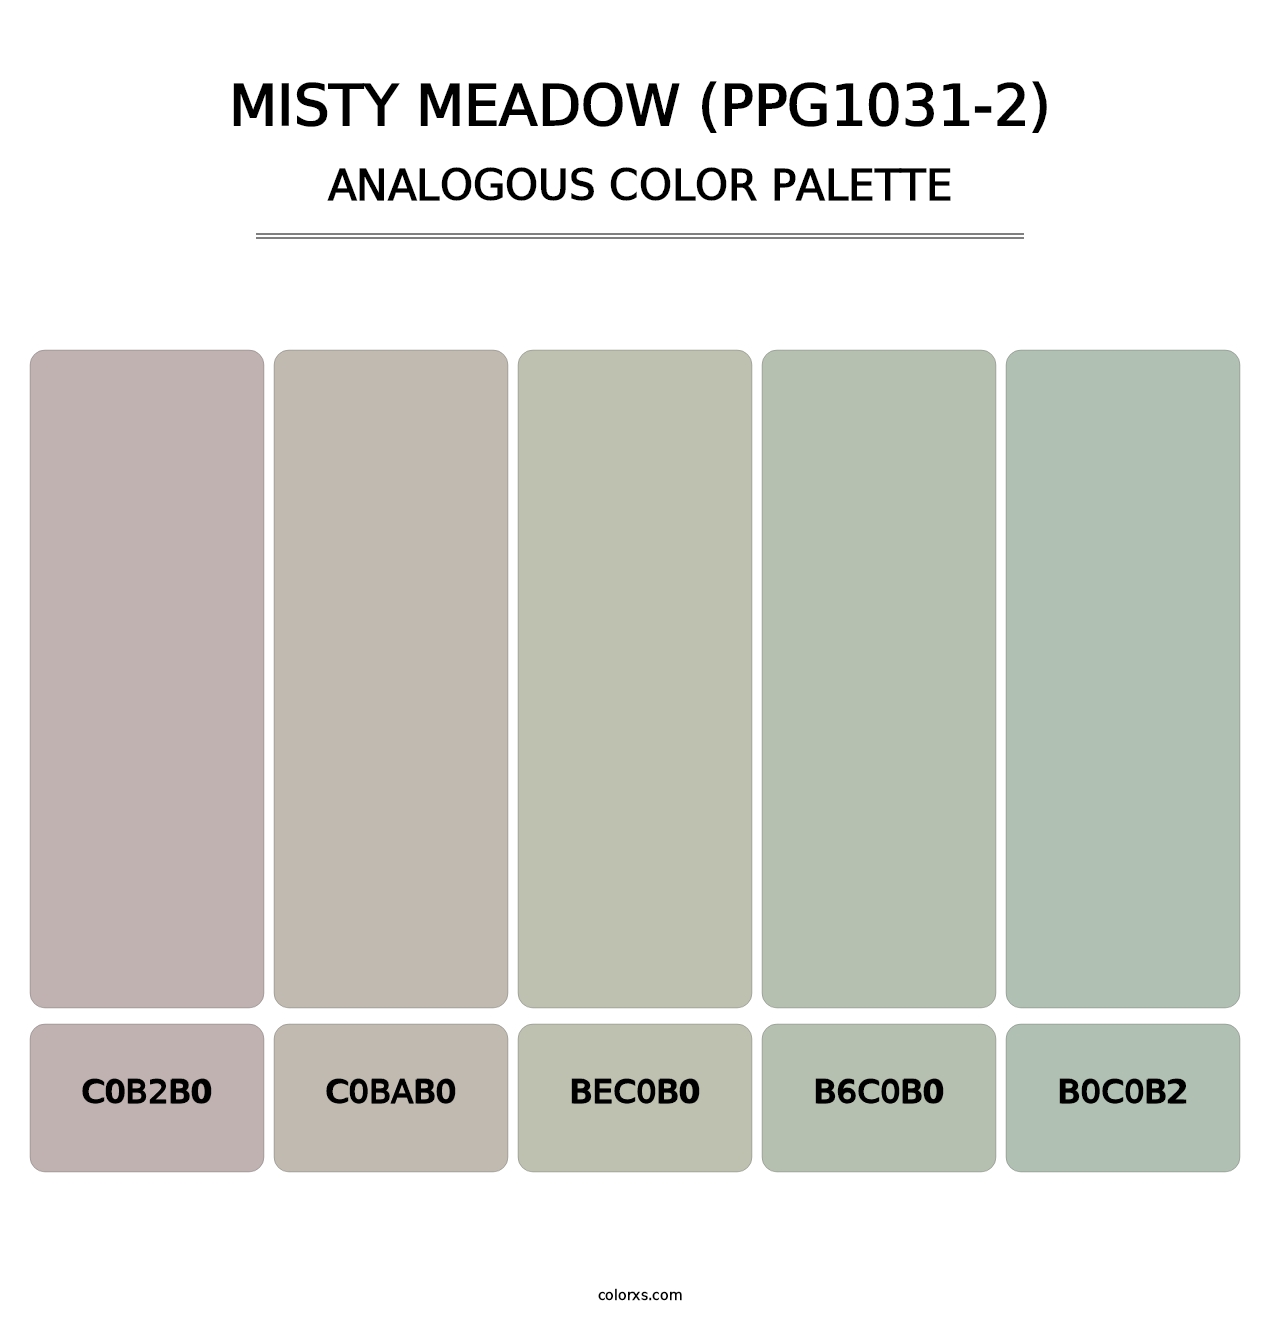 Misty Meadow (PPG1031-2) - Analogous Color Palette